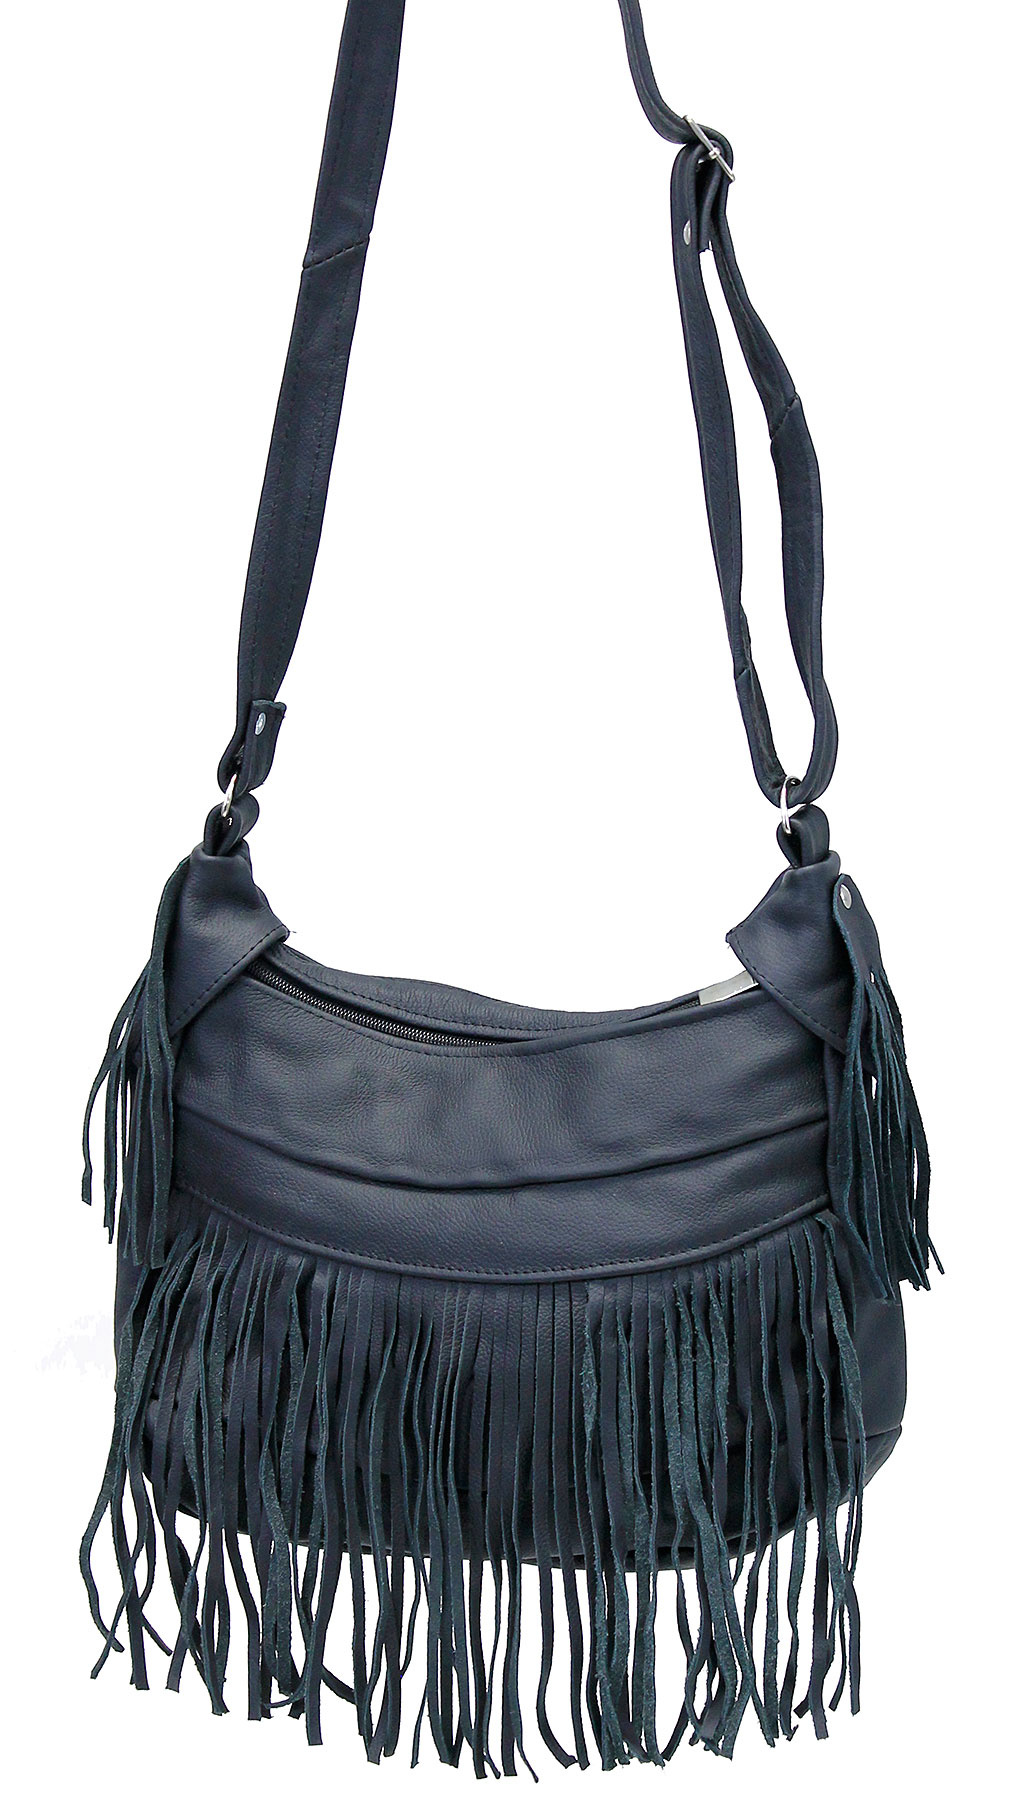 The Sak Womens Iris Crossbody in Leather Casual Purse With Adjustable Strap  Zipper Pockets, Black, One Size US: Handbags: Amazon.com